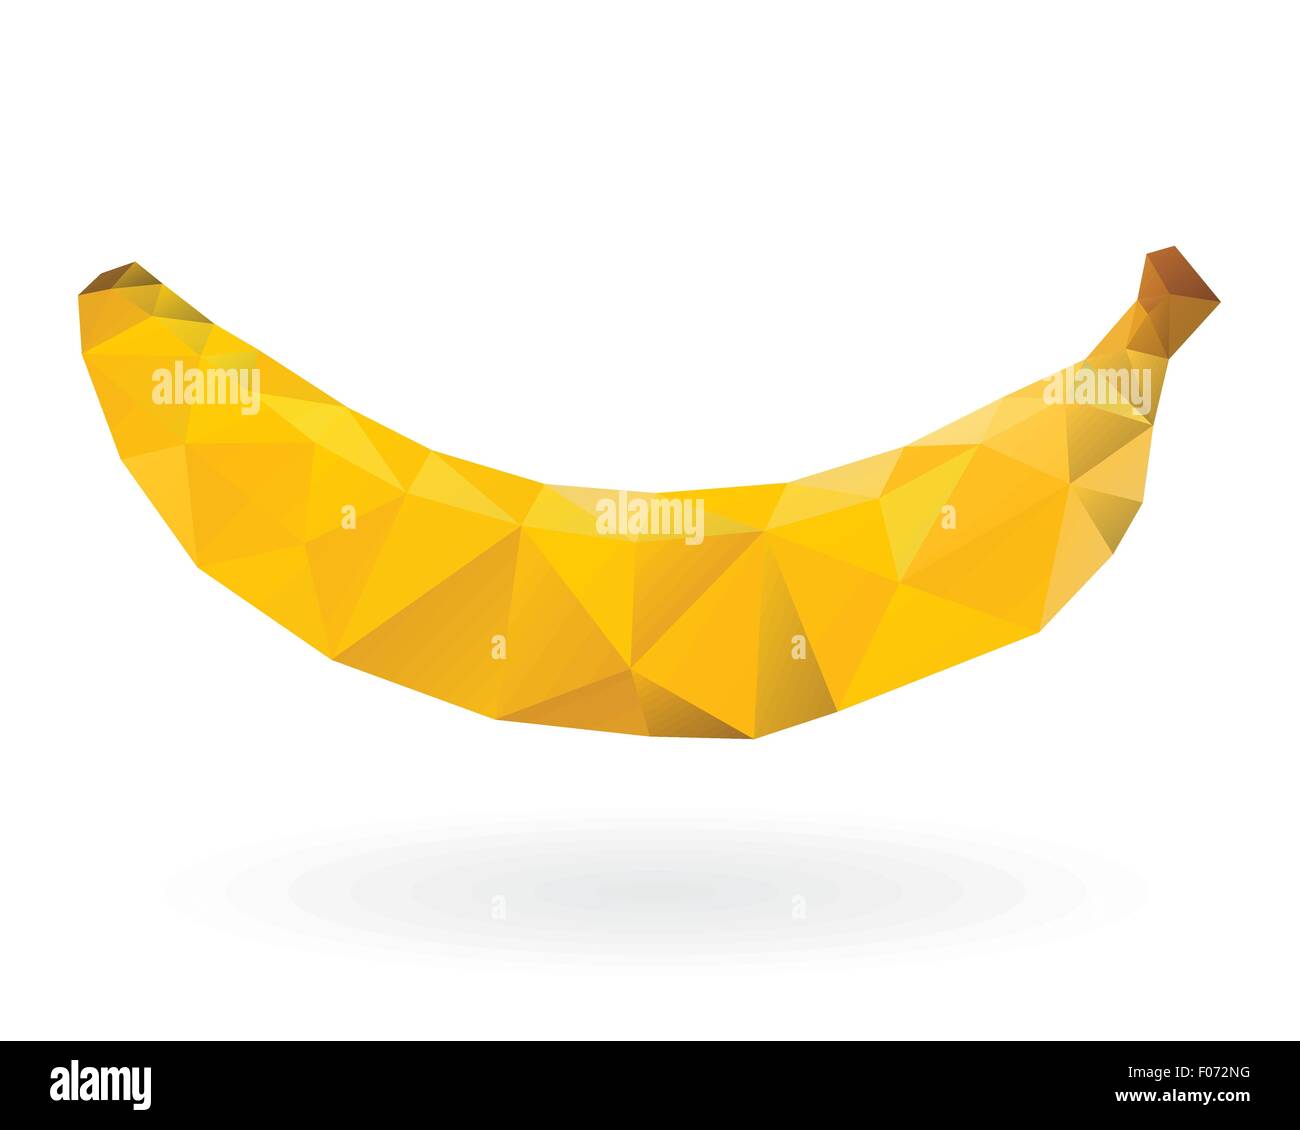 Banana isolated lowpoly design vector illustration. Stock Vector